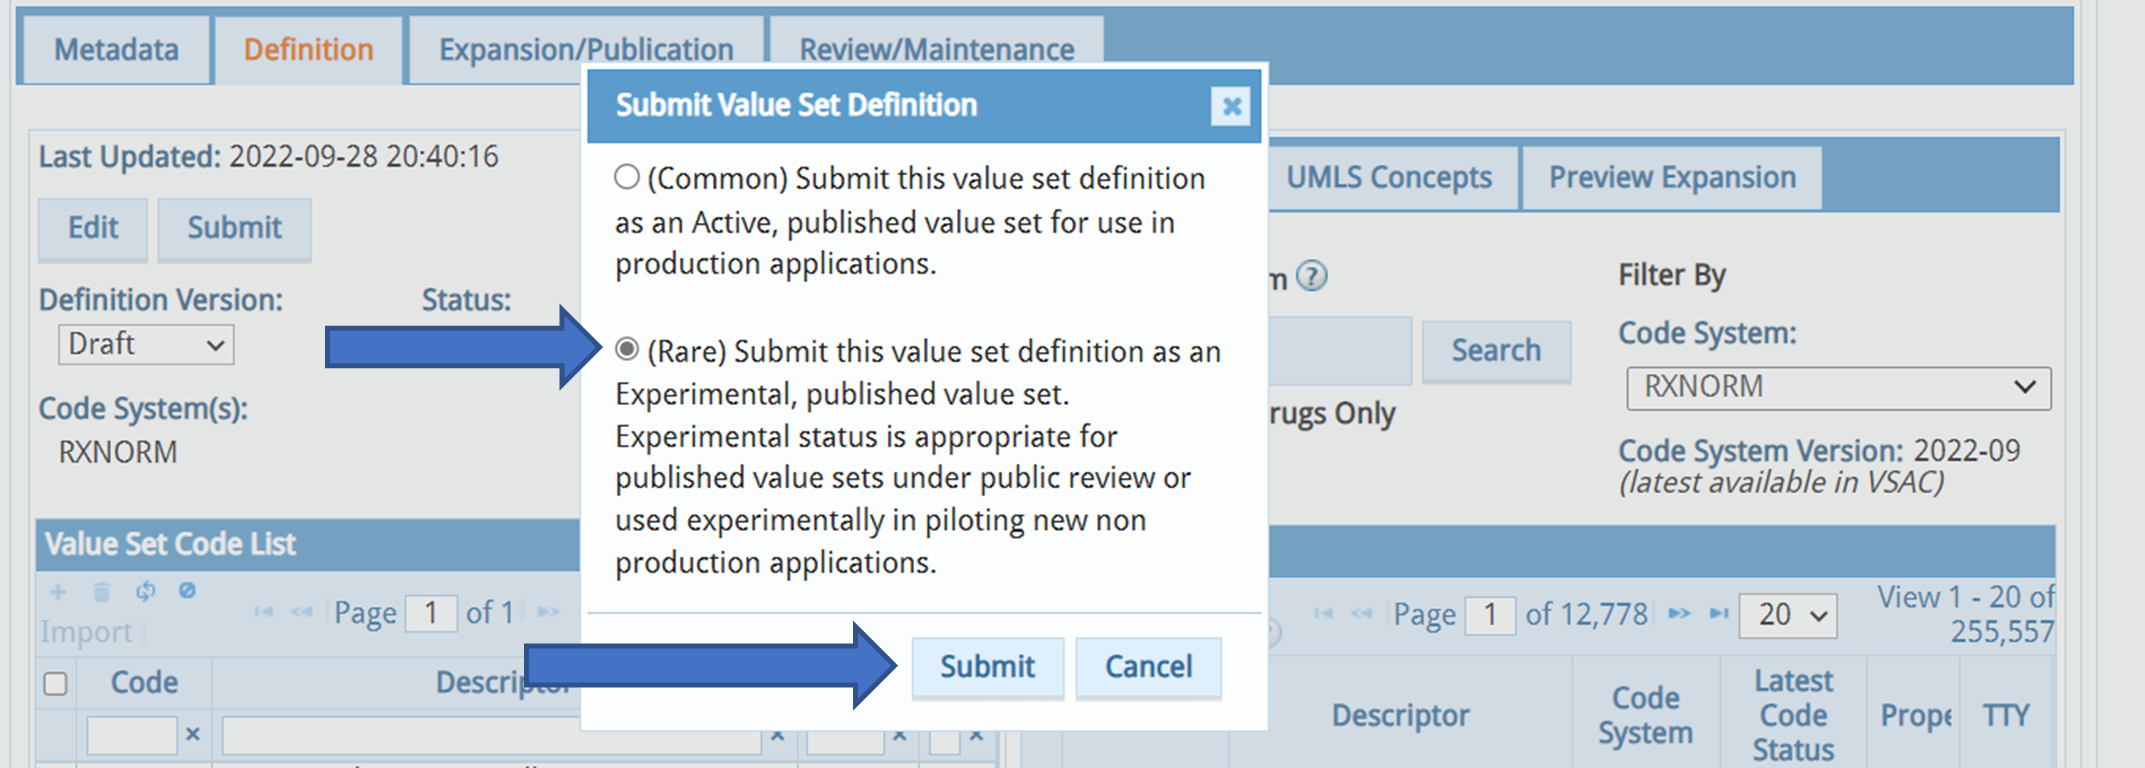 Submit Value Set Definition window